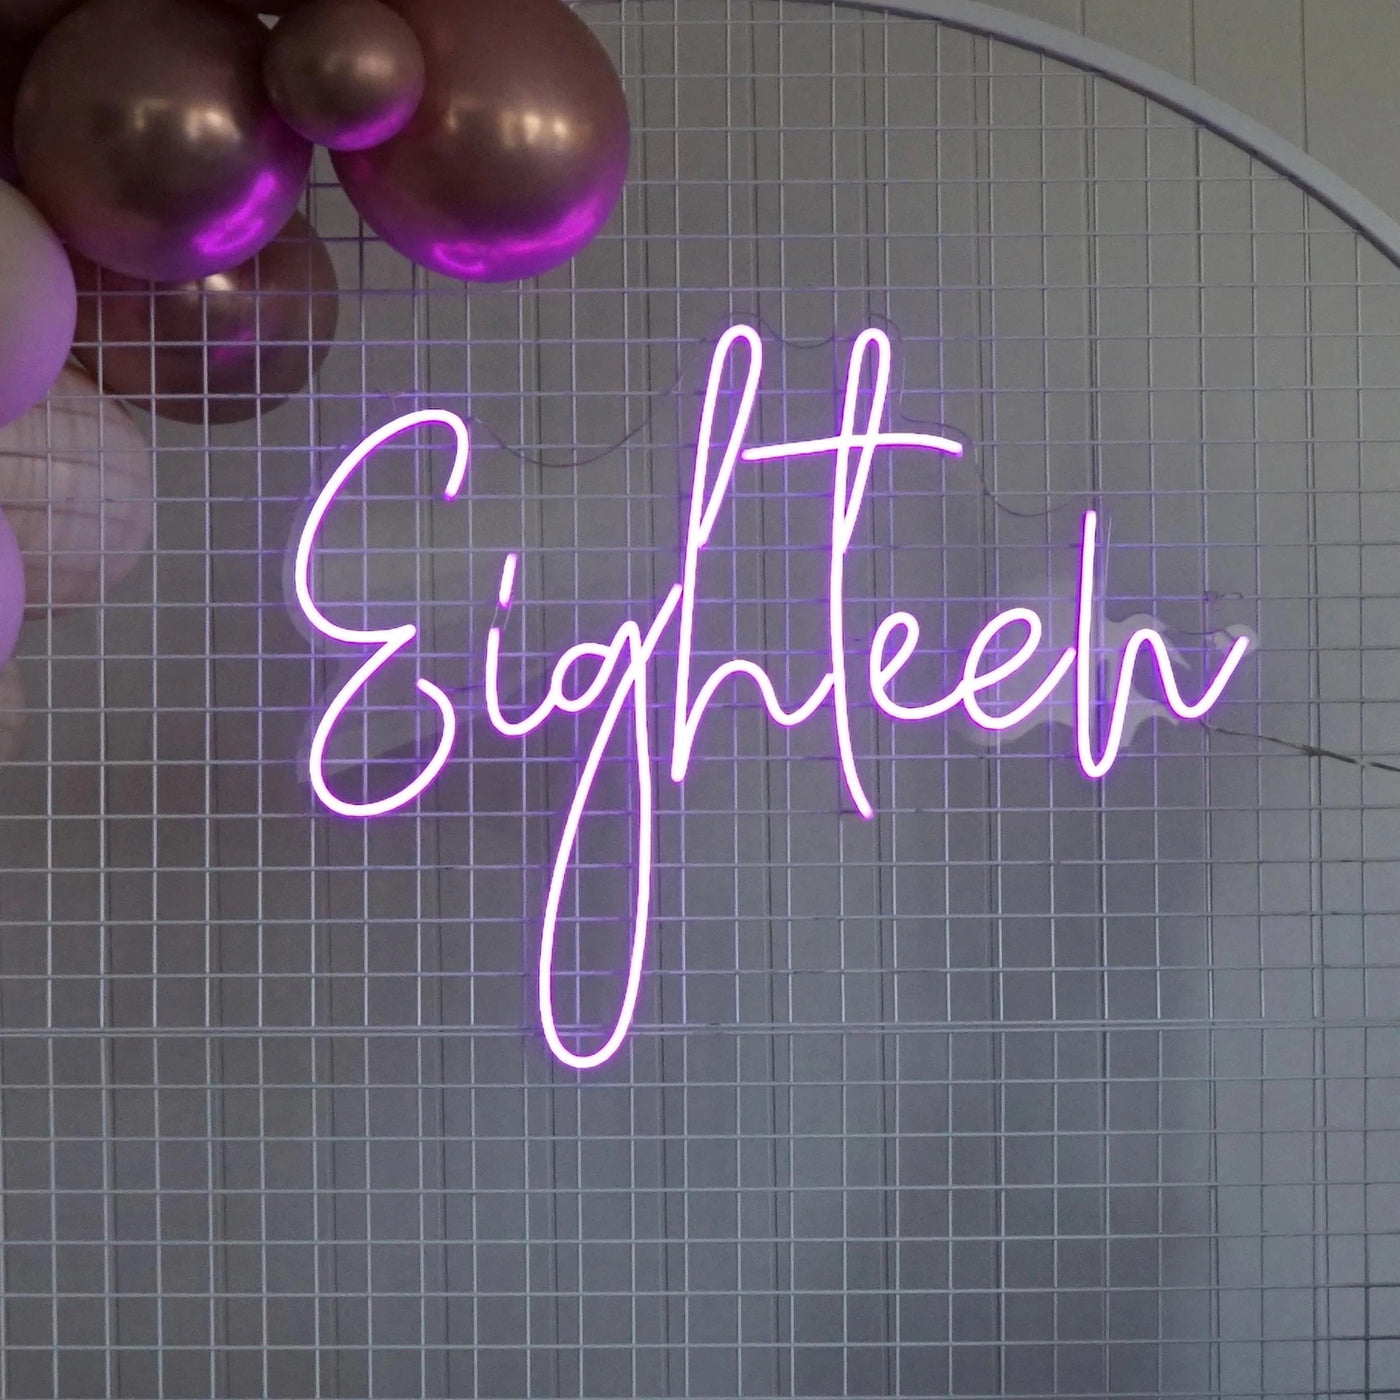 Eighteen 18th Neon Sign Birthday Party Led Neon Lighting Decoration